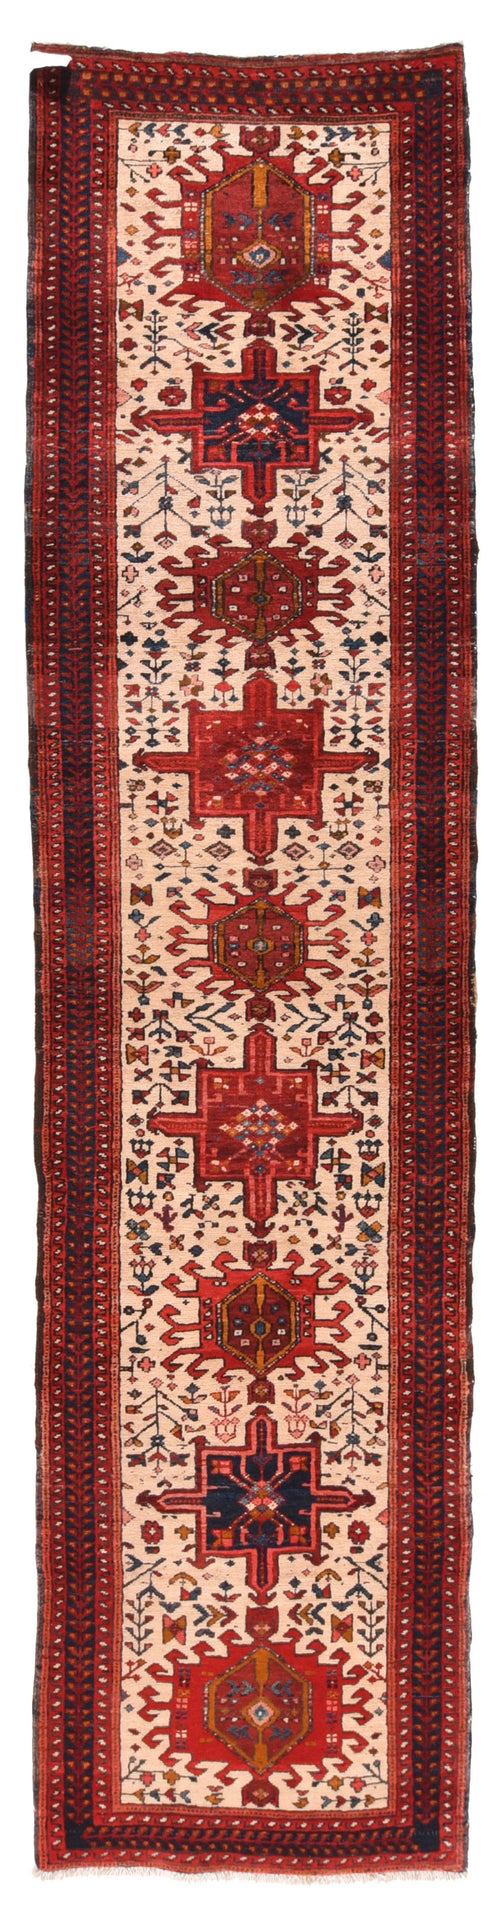 Semi Antique Red Persian Karajeh Area Rug